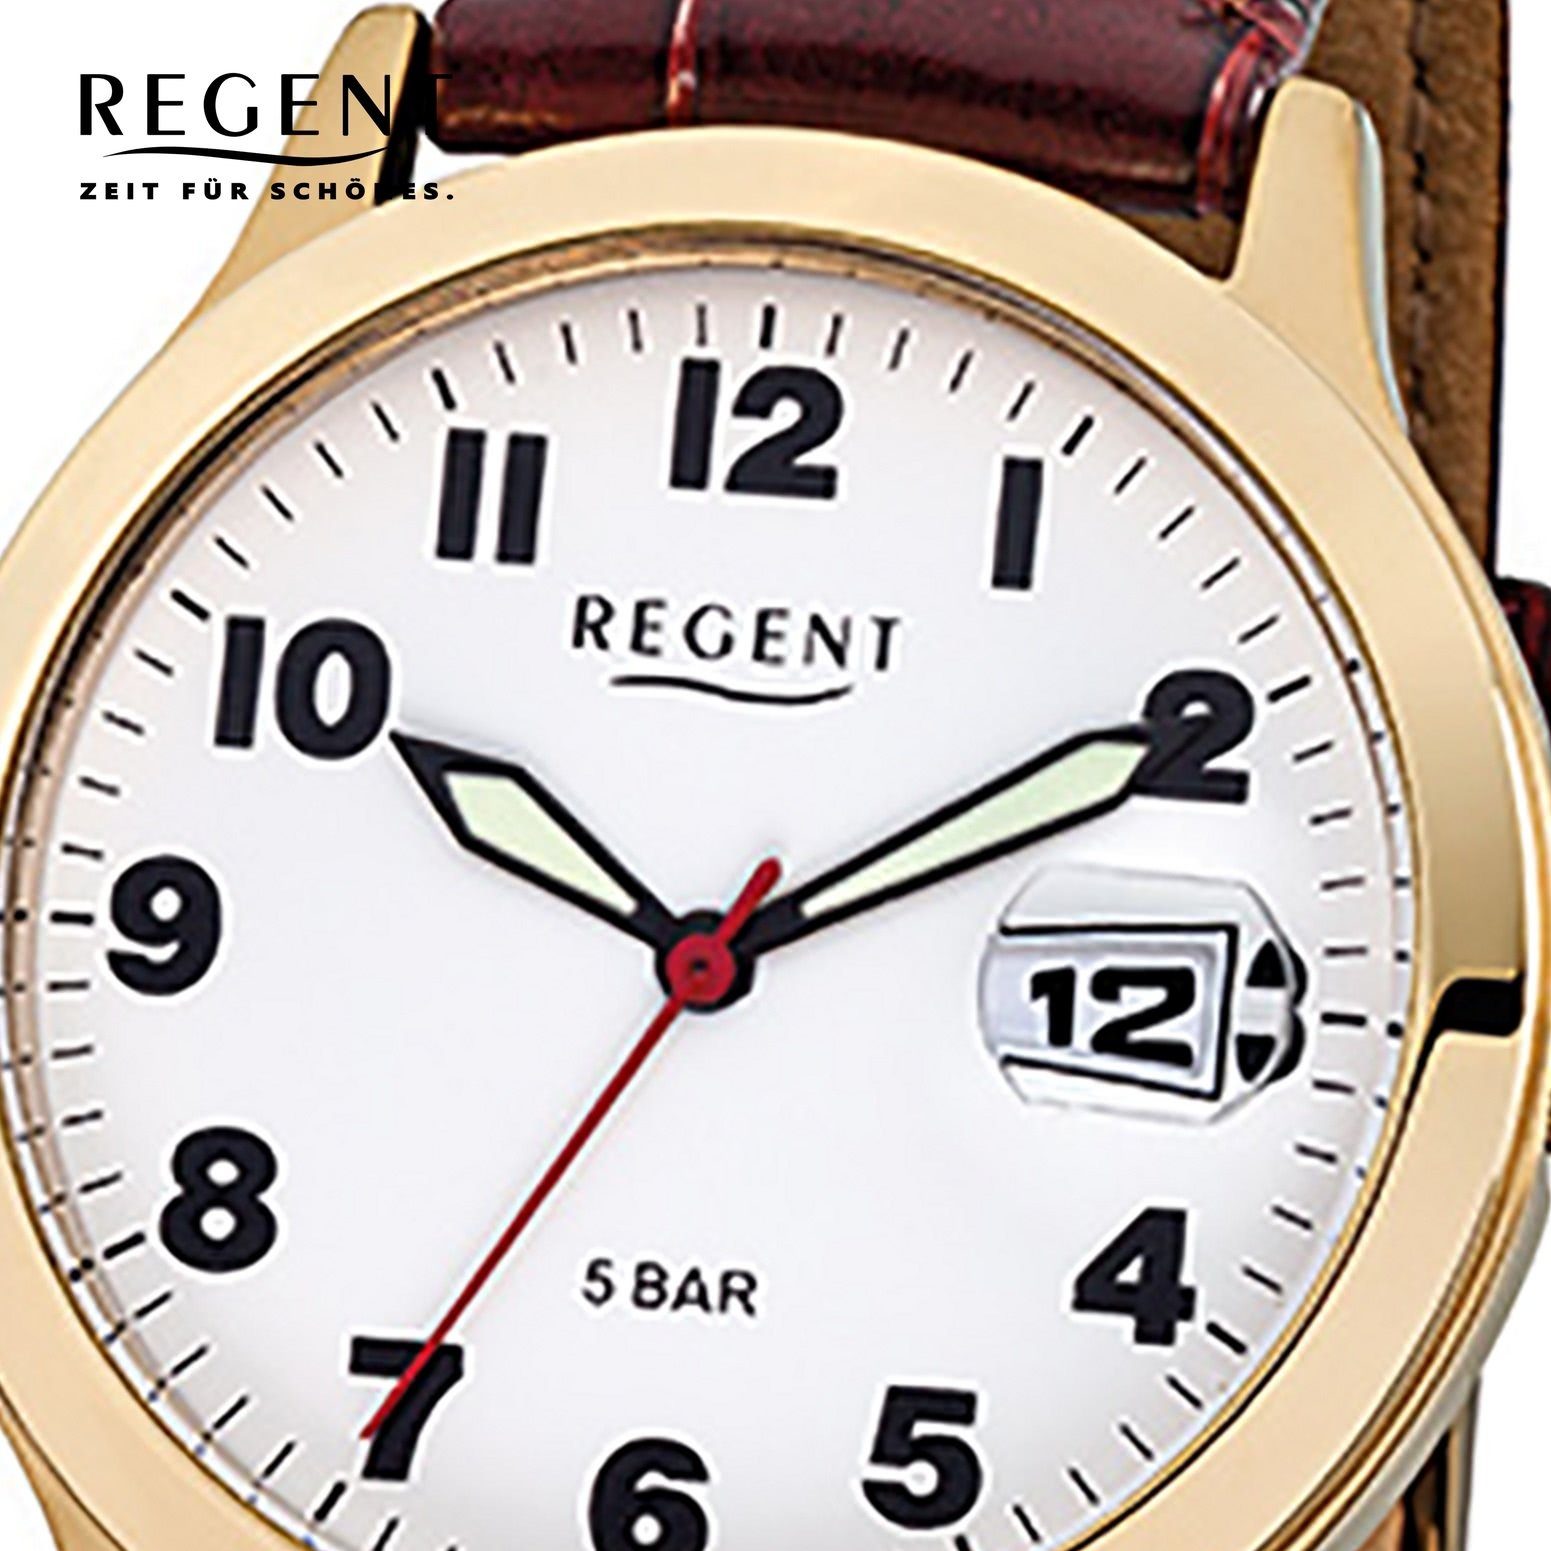 39mm), Armbanduhr (ca. Lederarmband Regent mittel Herren-Armbanduhr Herren Analog Quarzuhr F-789, Regent braun rund,